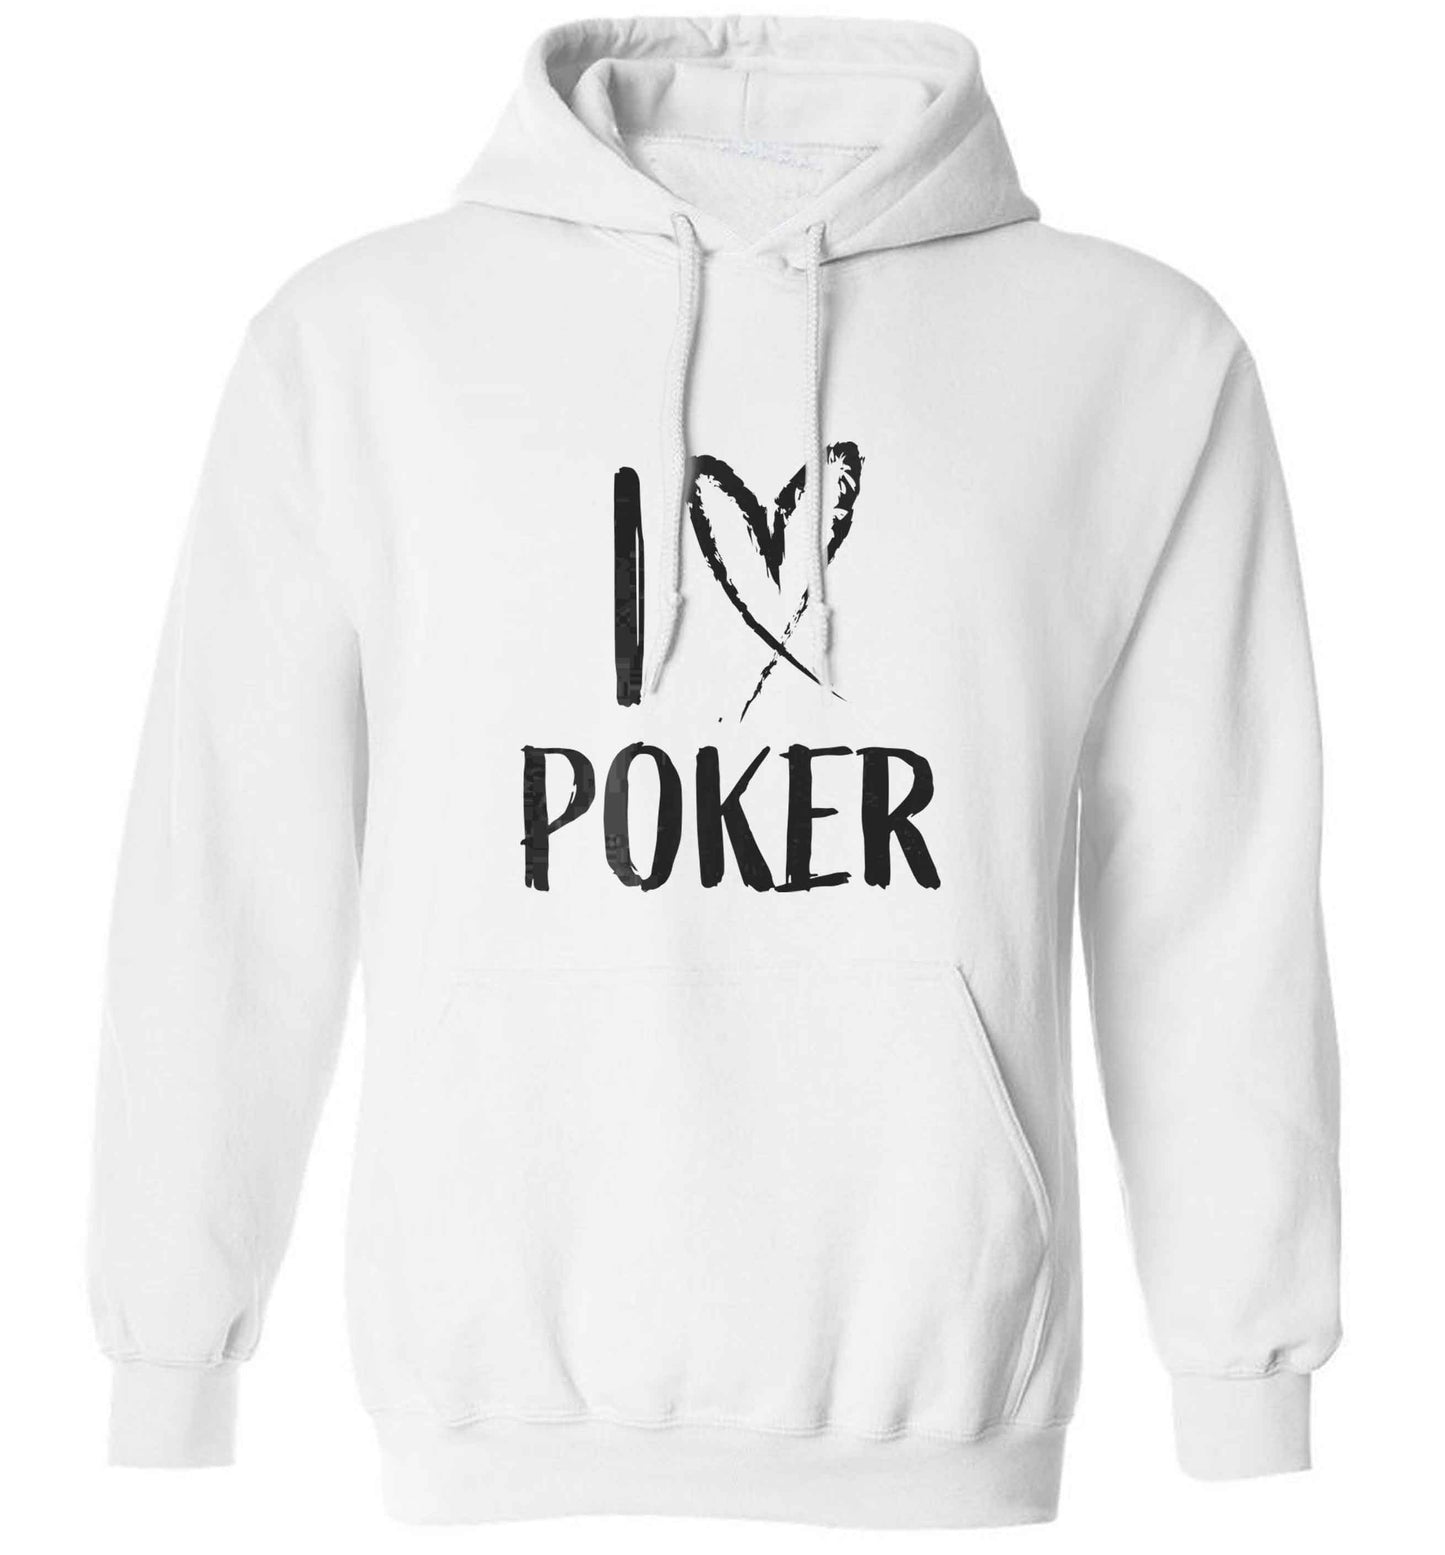 I love poker adults unisex white hoodie 2XL